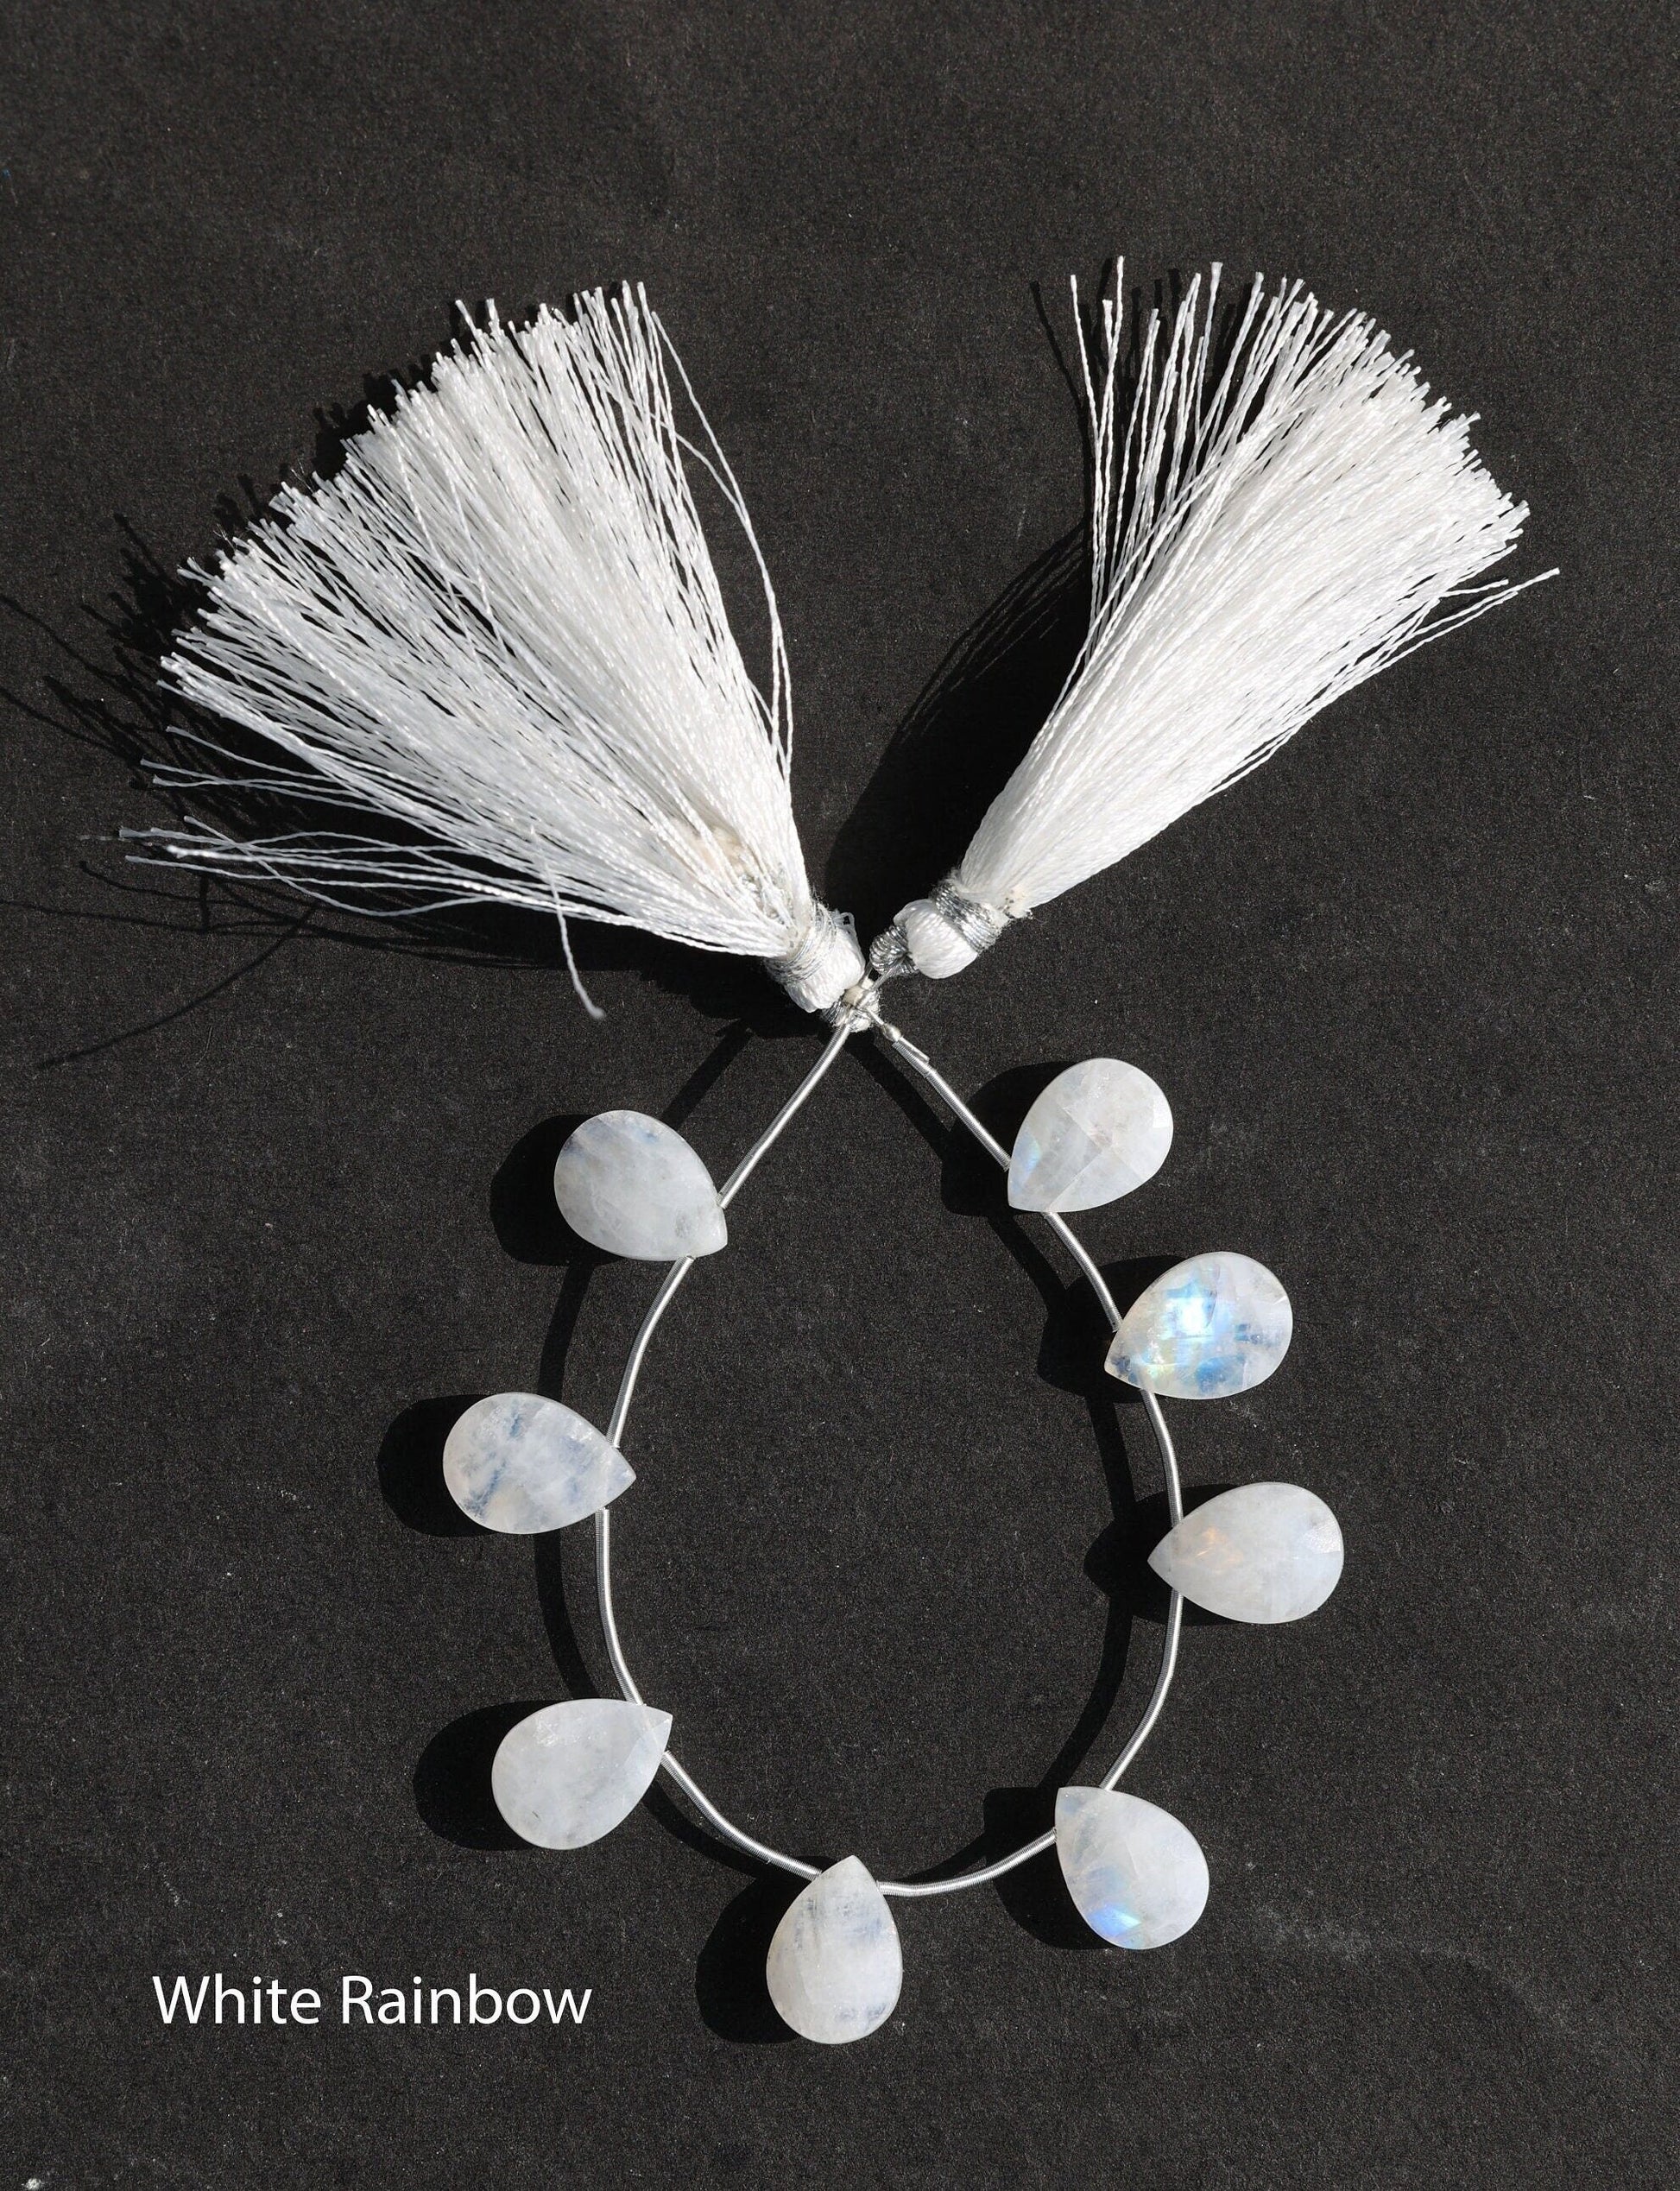 8 Pieces Gemstones Briolettes Beads White Rainbow Labradorite Amethyst Lapis 10 * 14 MM Customize / Personalize Stones & Quantity - Meena Design